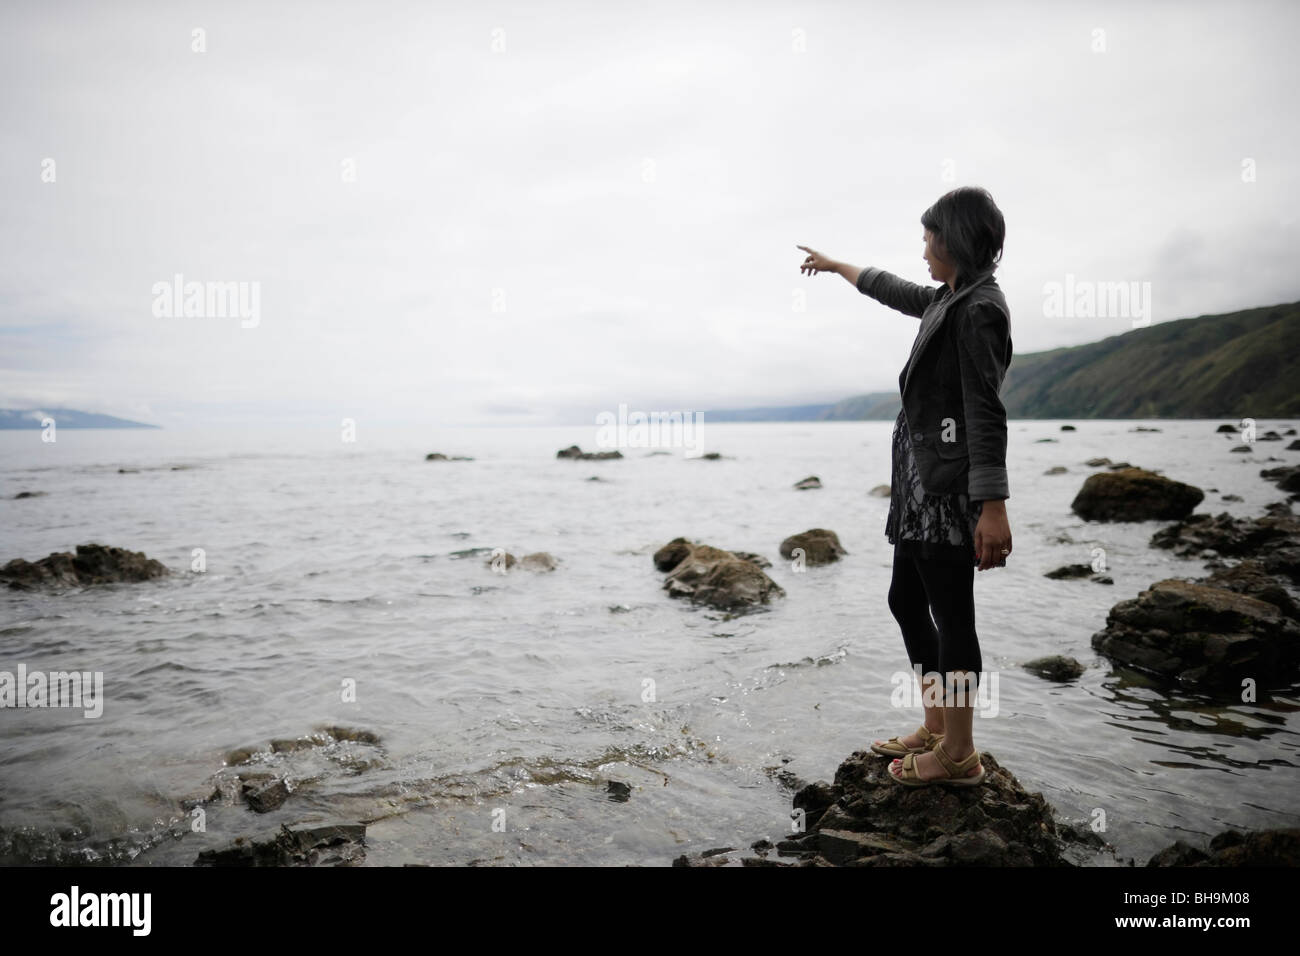 Frau auf felsigen Küste Meer darauf hinweisen Stockfoto